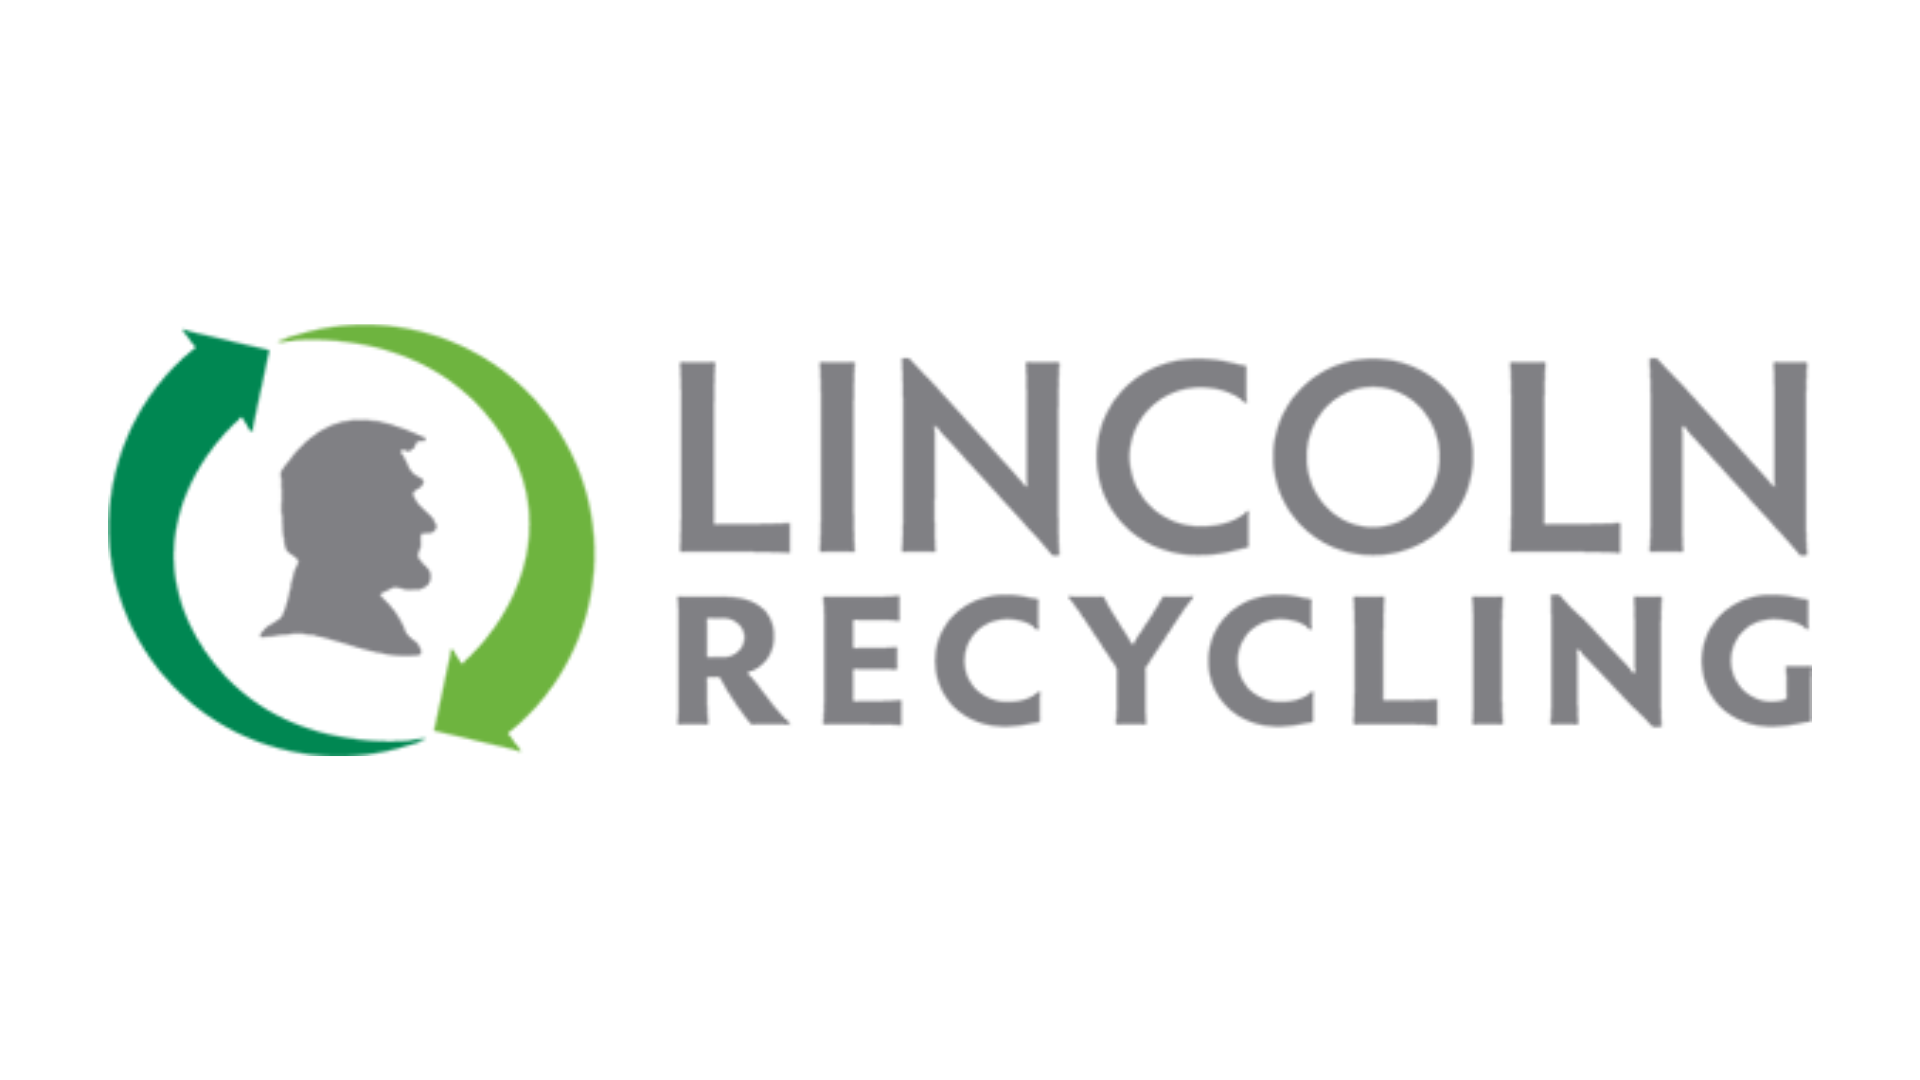 OAK Lincoln Recycling